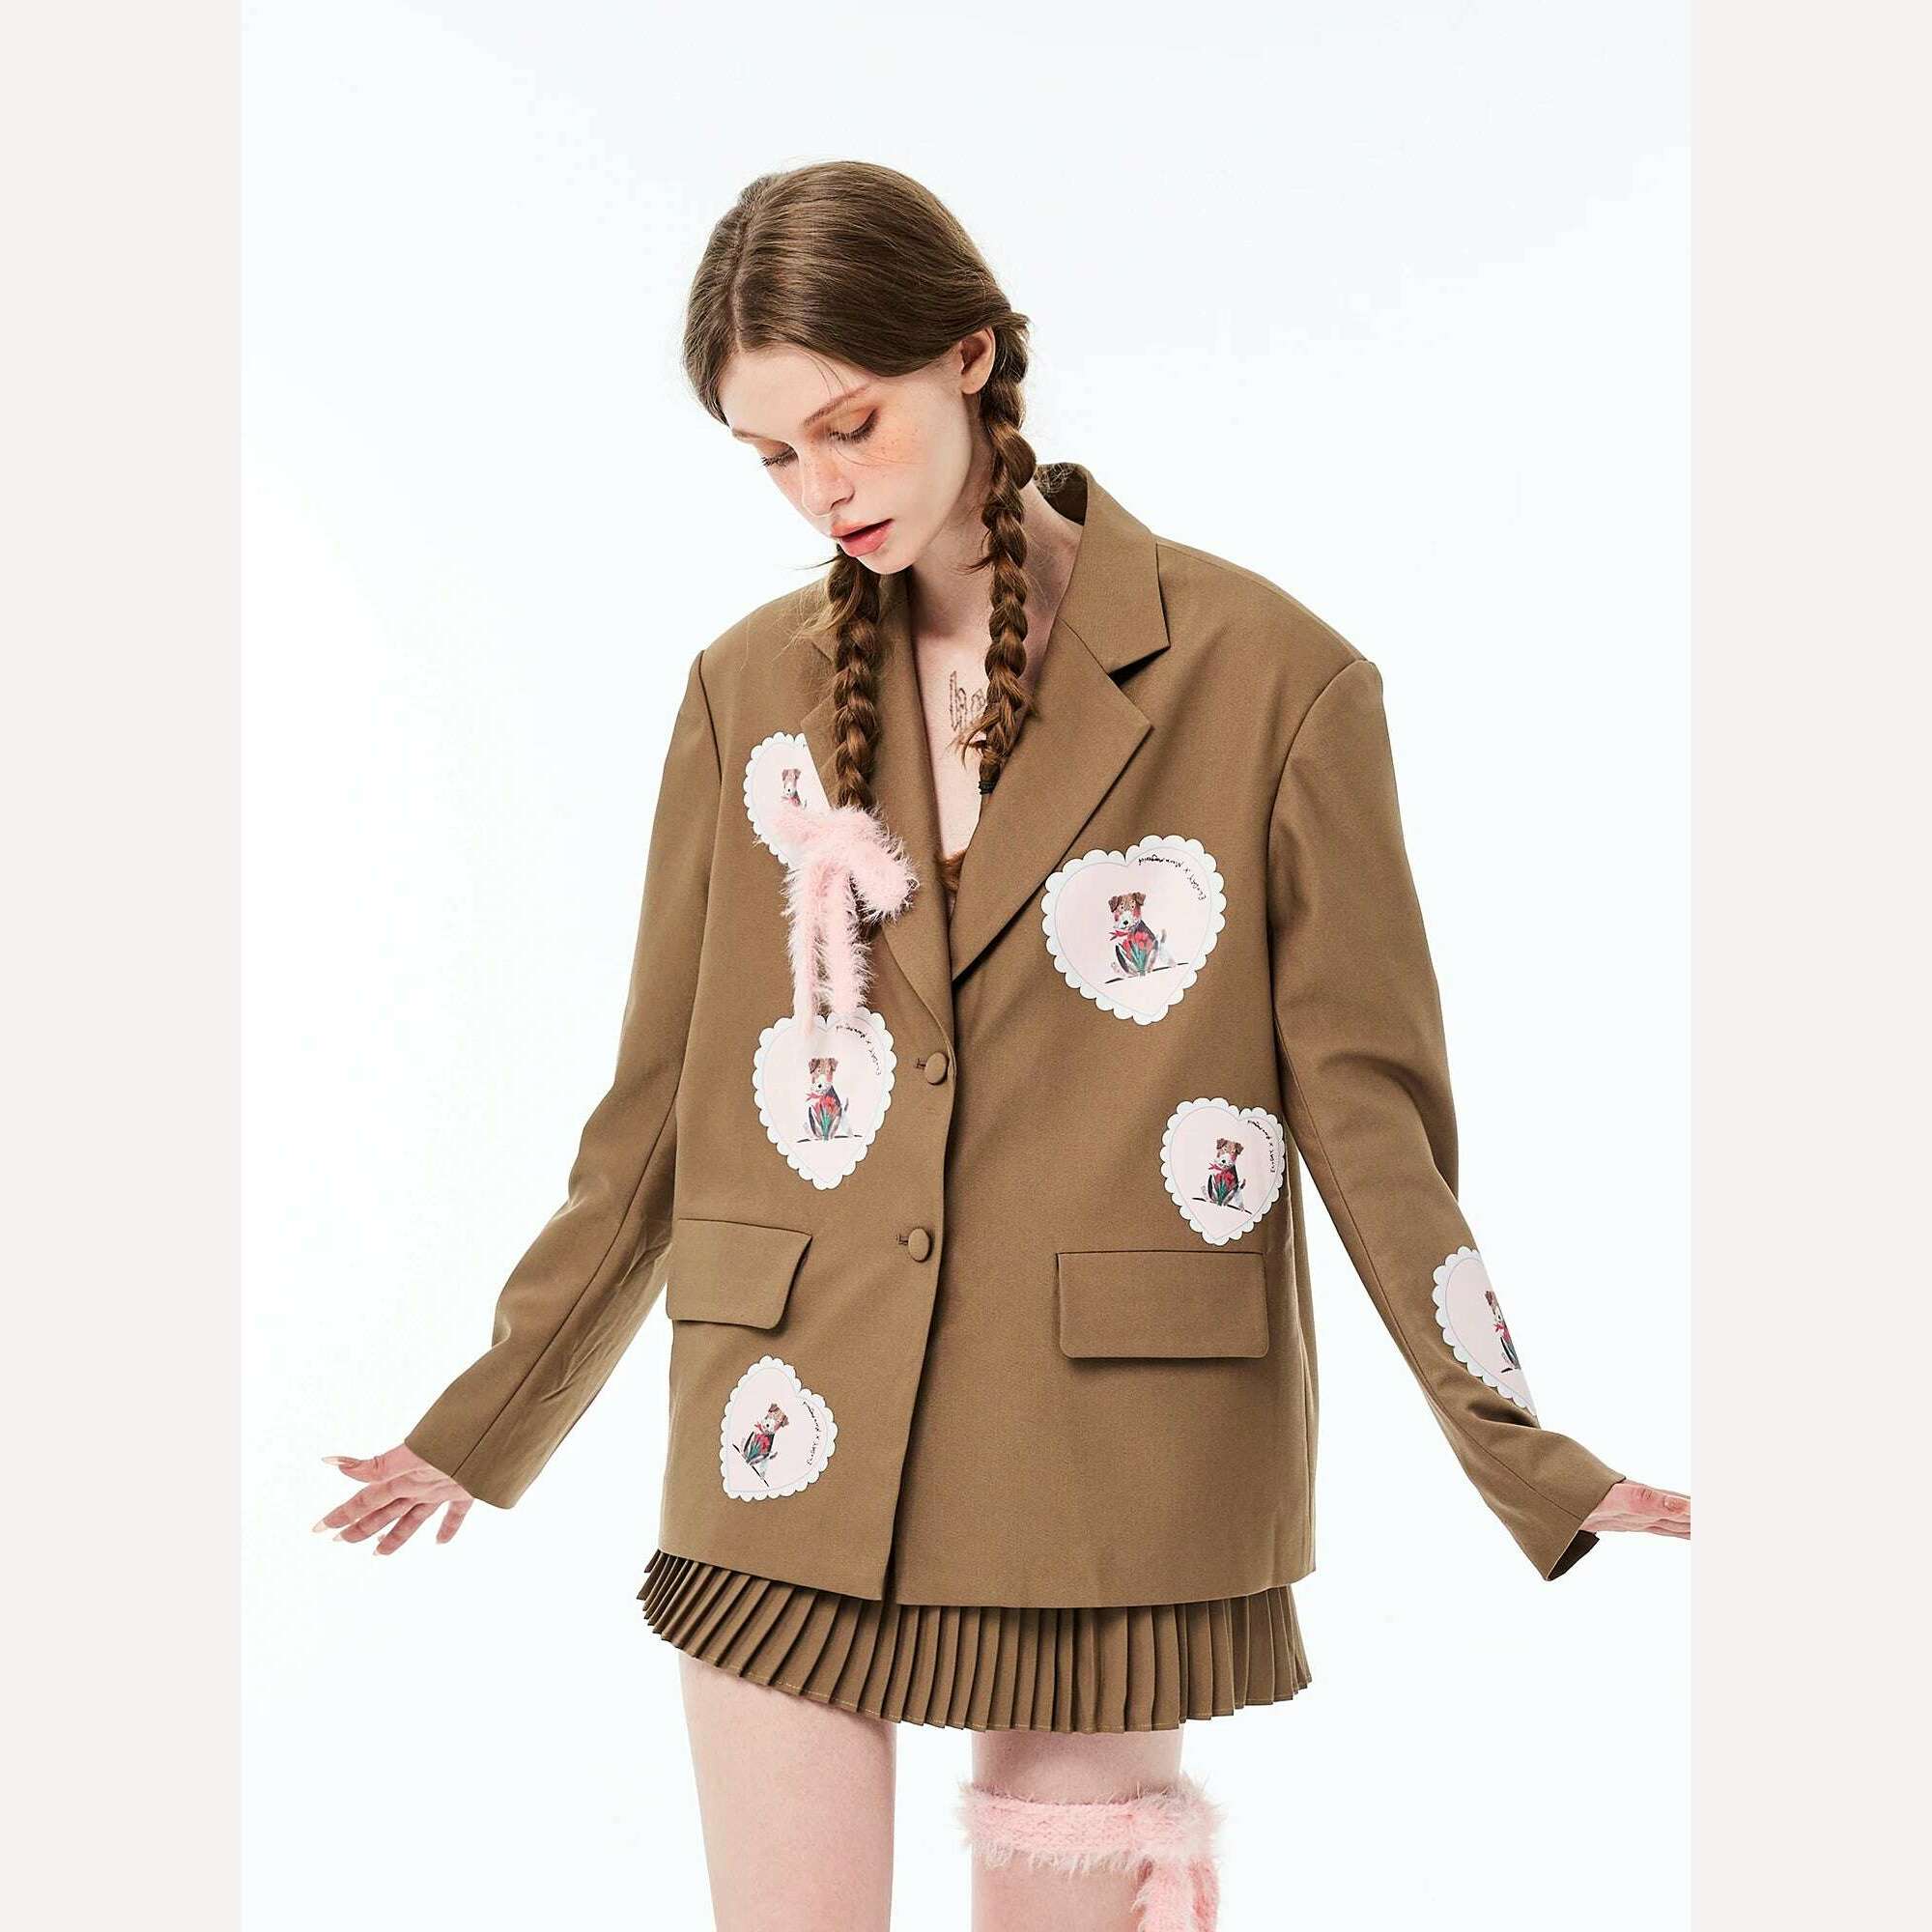 KIMLUD, Women's Design Suit Early Autumn Love Applique Loose Padded Shoulder High Sense Casual Suit Jacket, Brown (coat) / S, KIMLUD Women's Clothes